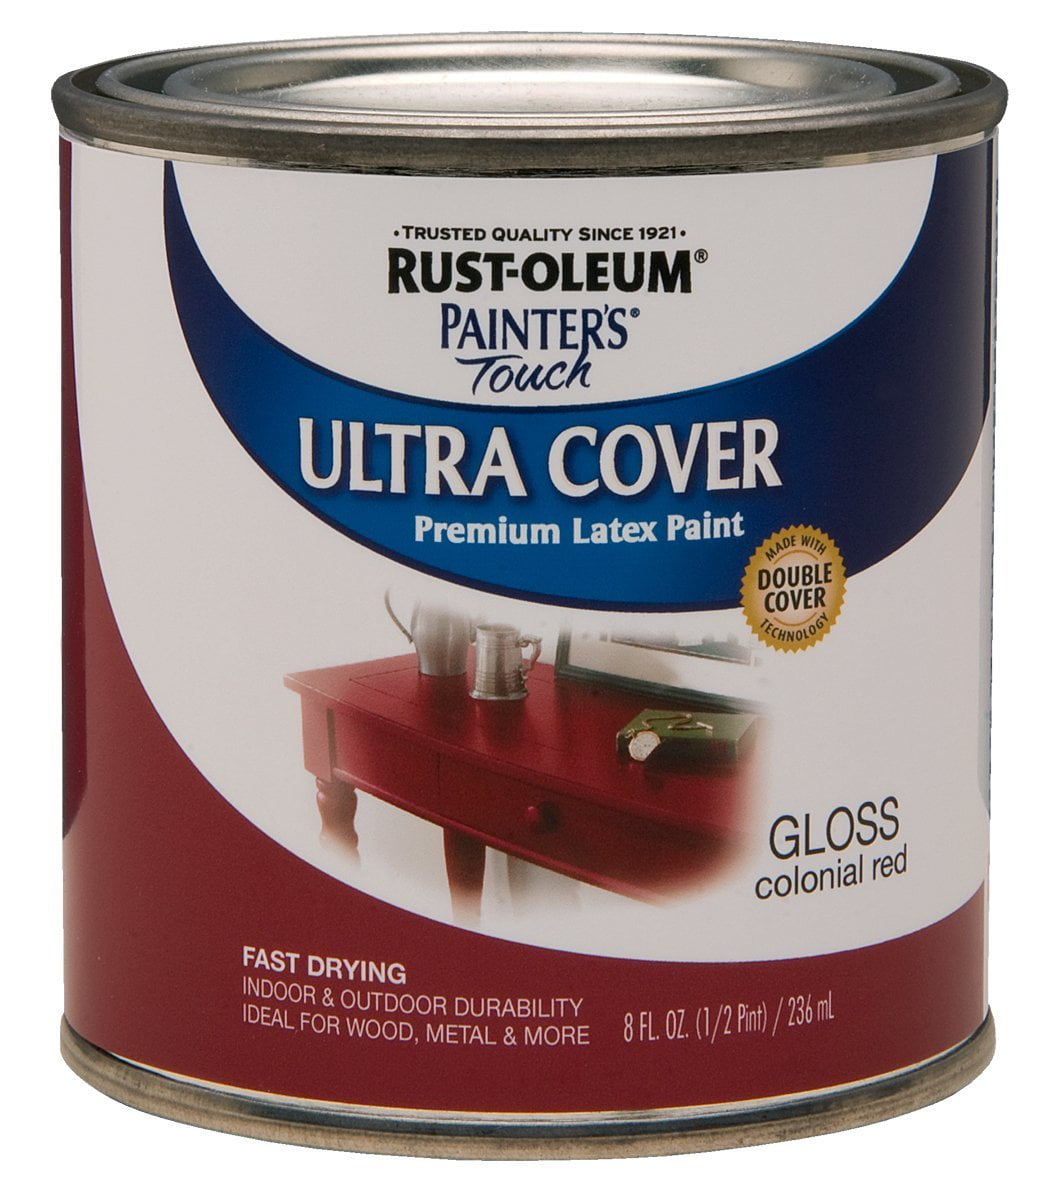 Rust Oleum Painter's Touch 2X Ultra Cover Premium Latex Paint, Kona Brown - 8 fl oz can